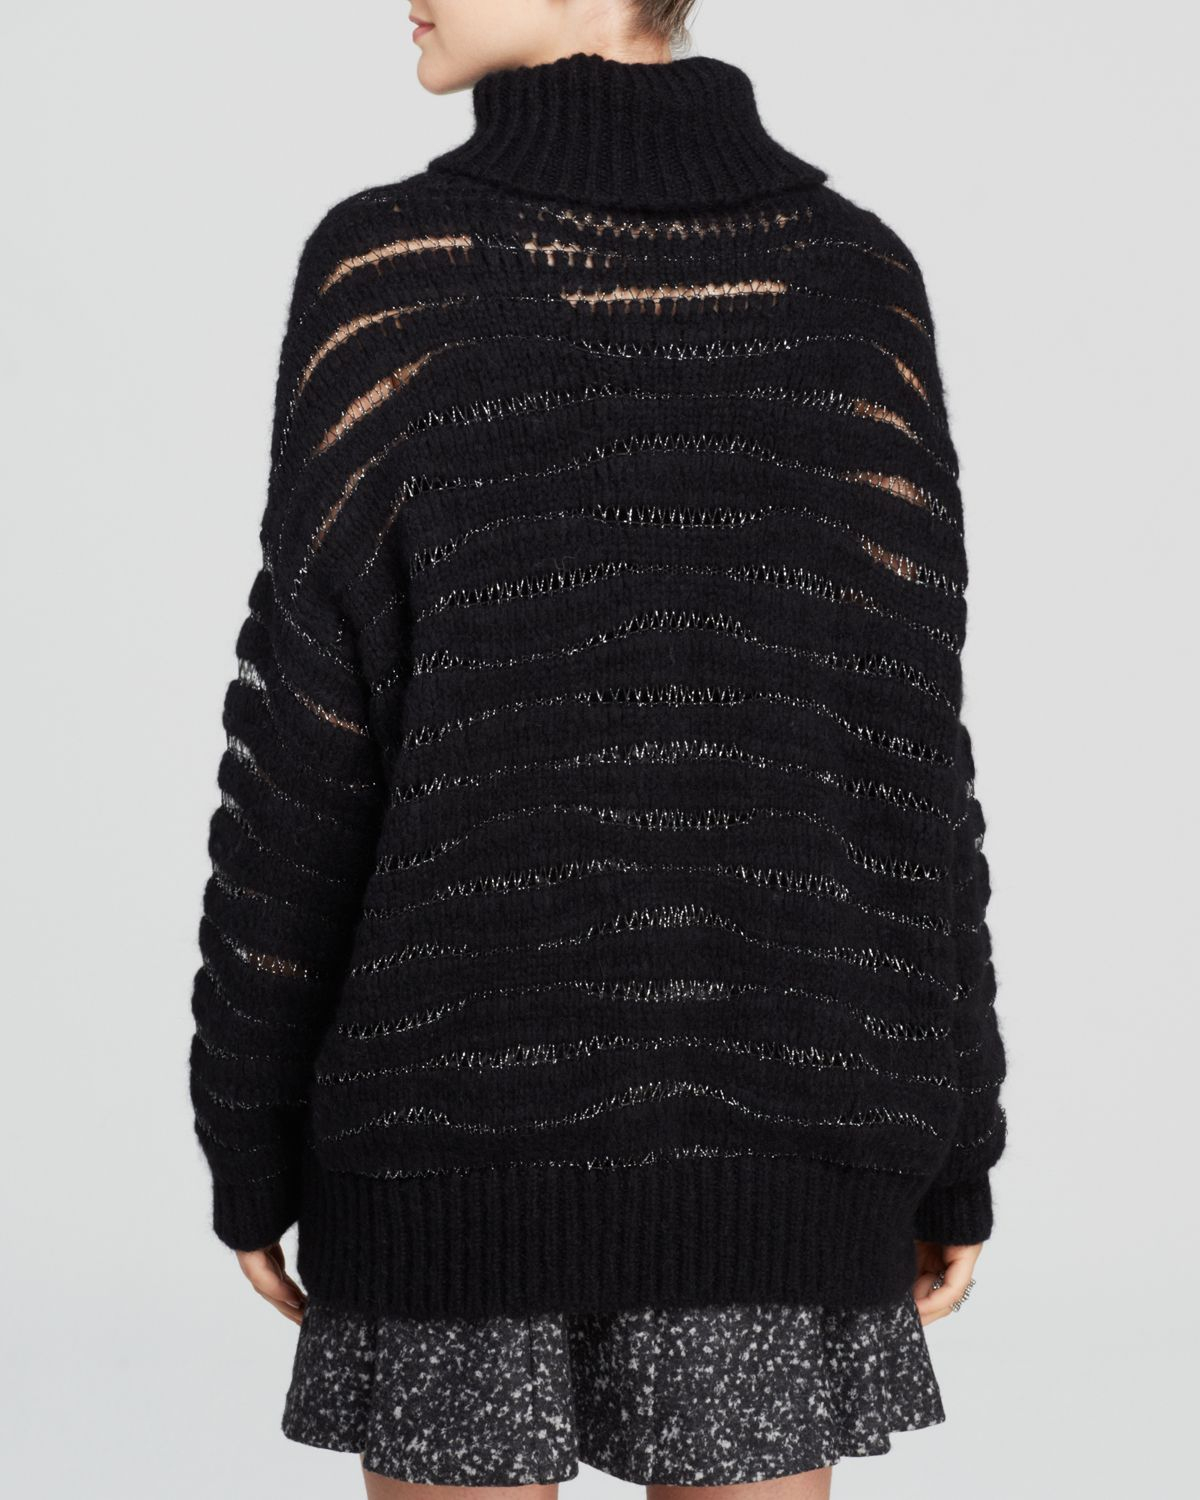 Nanette lepore Sweater - Sparkle Yarn Turtleneck in Black | Lyst